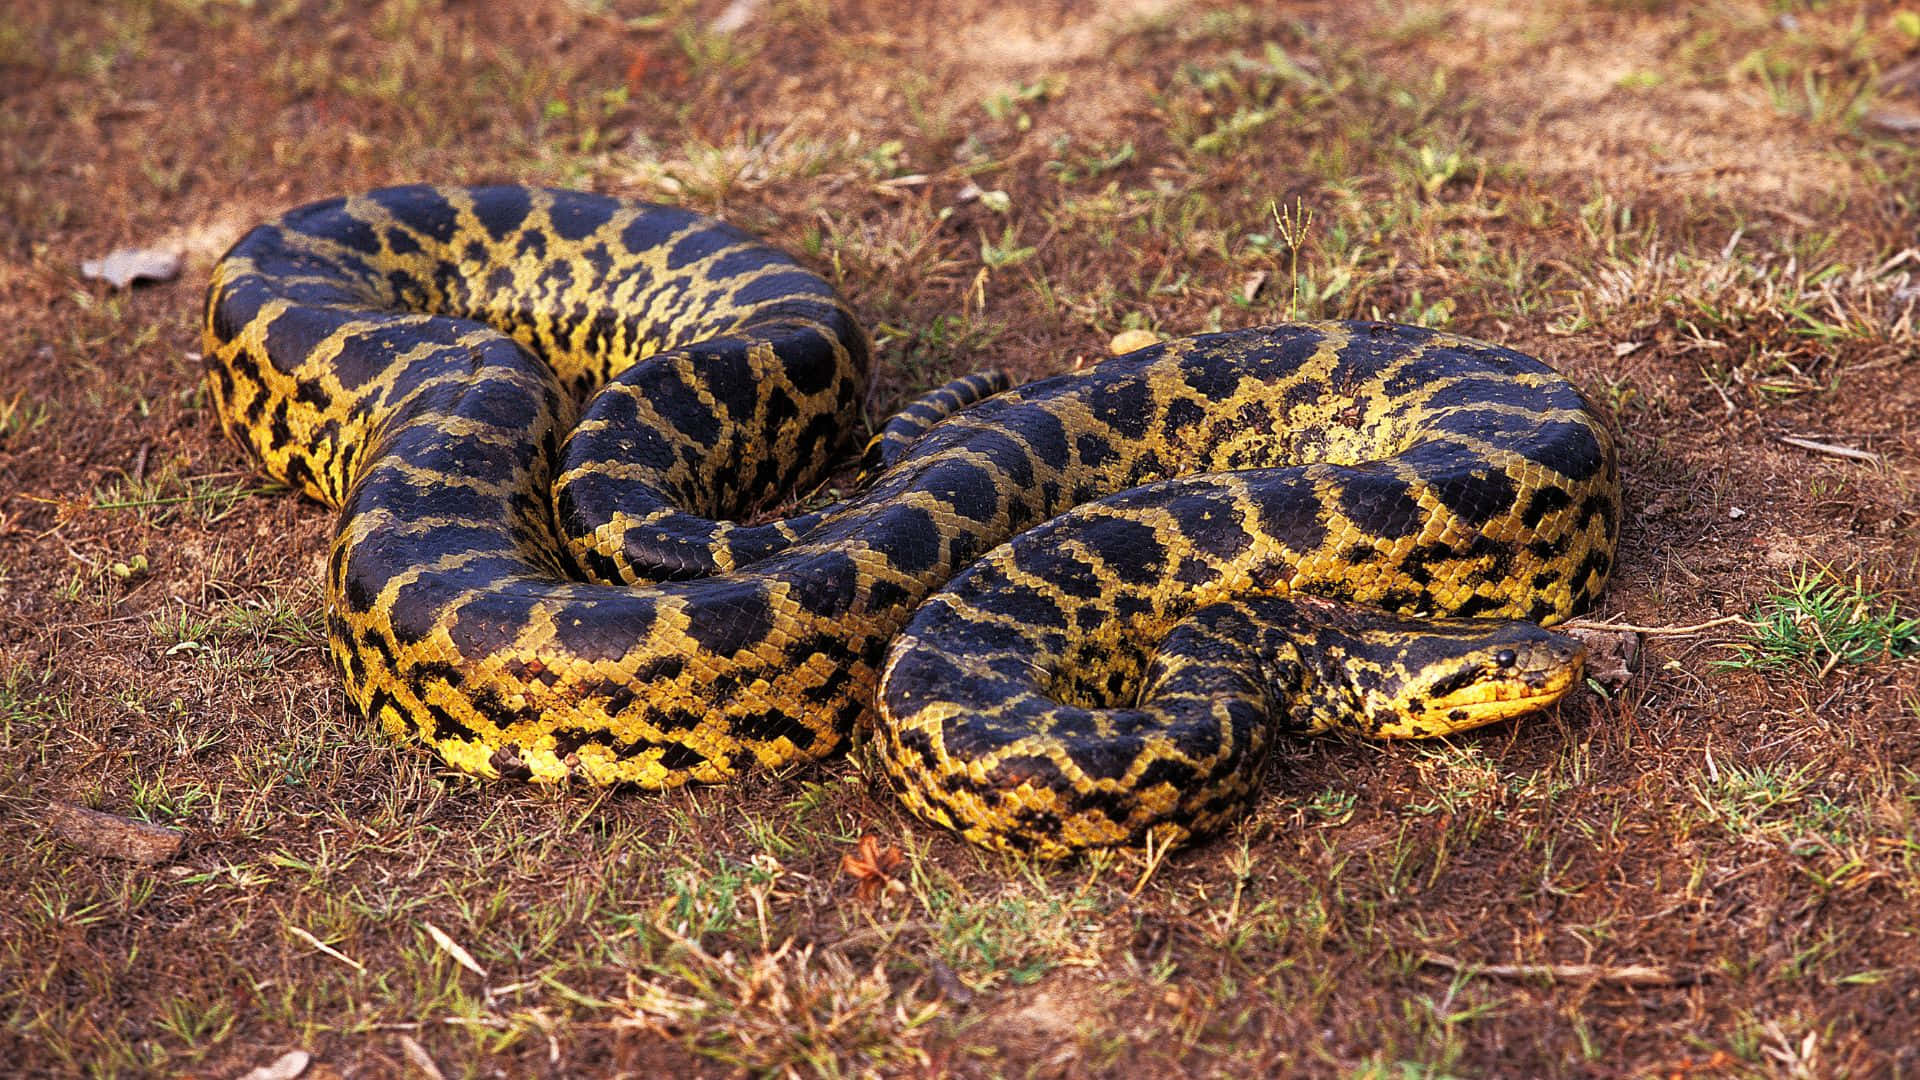 Yellow Black Anaconda Coiledin Nature.jpg Wallpaper